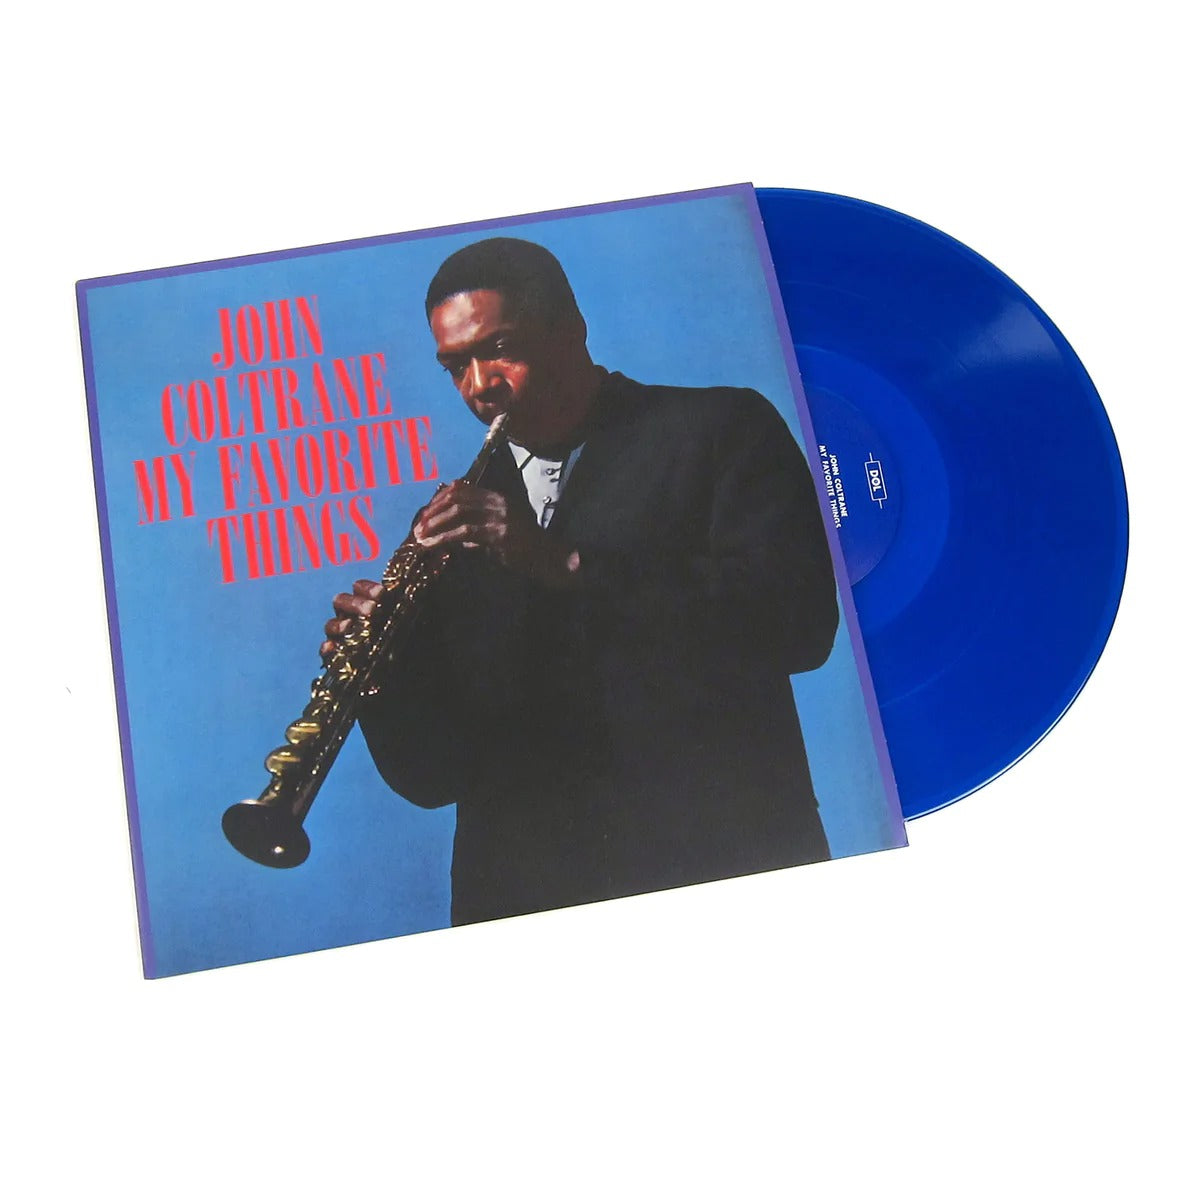 John Coltrane - My Favorite Things LP (180g, Colored Vinyl)